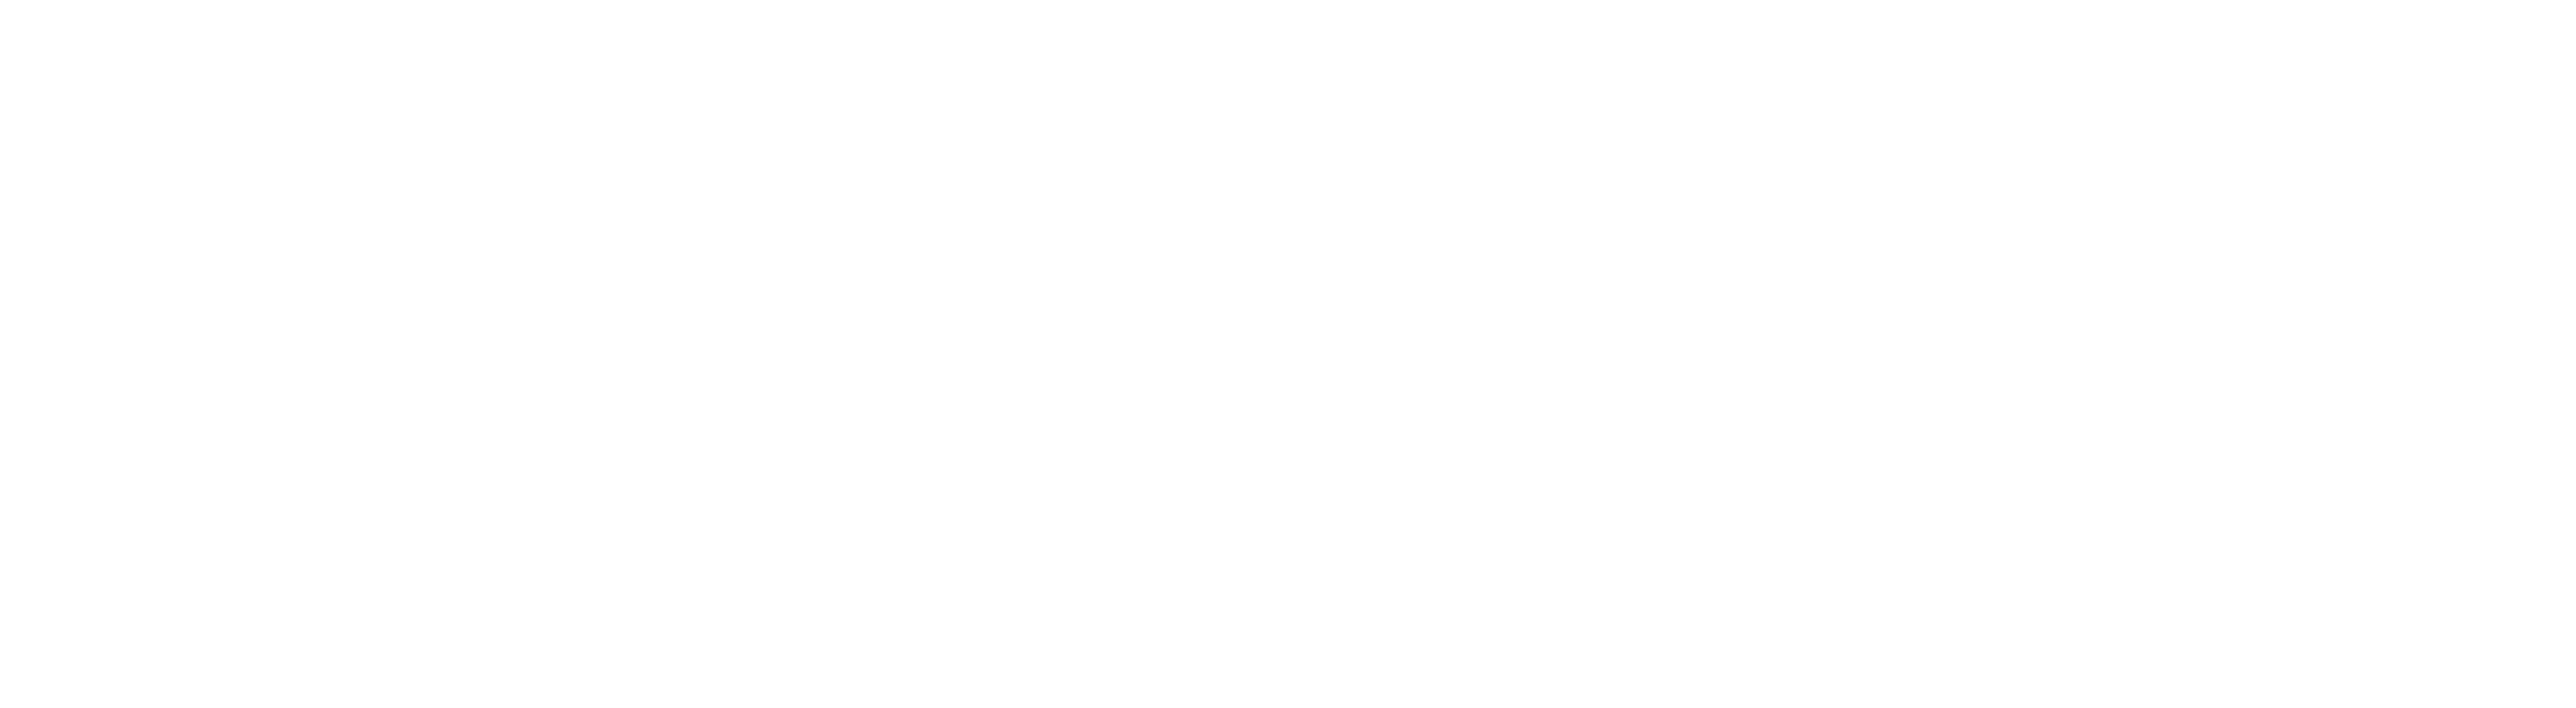 ambrosia-consulting-logo-black